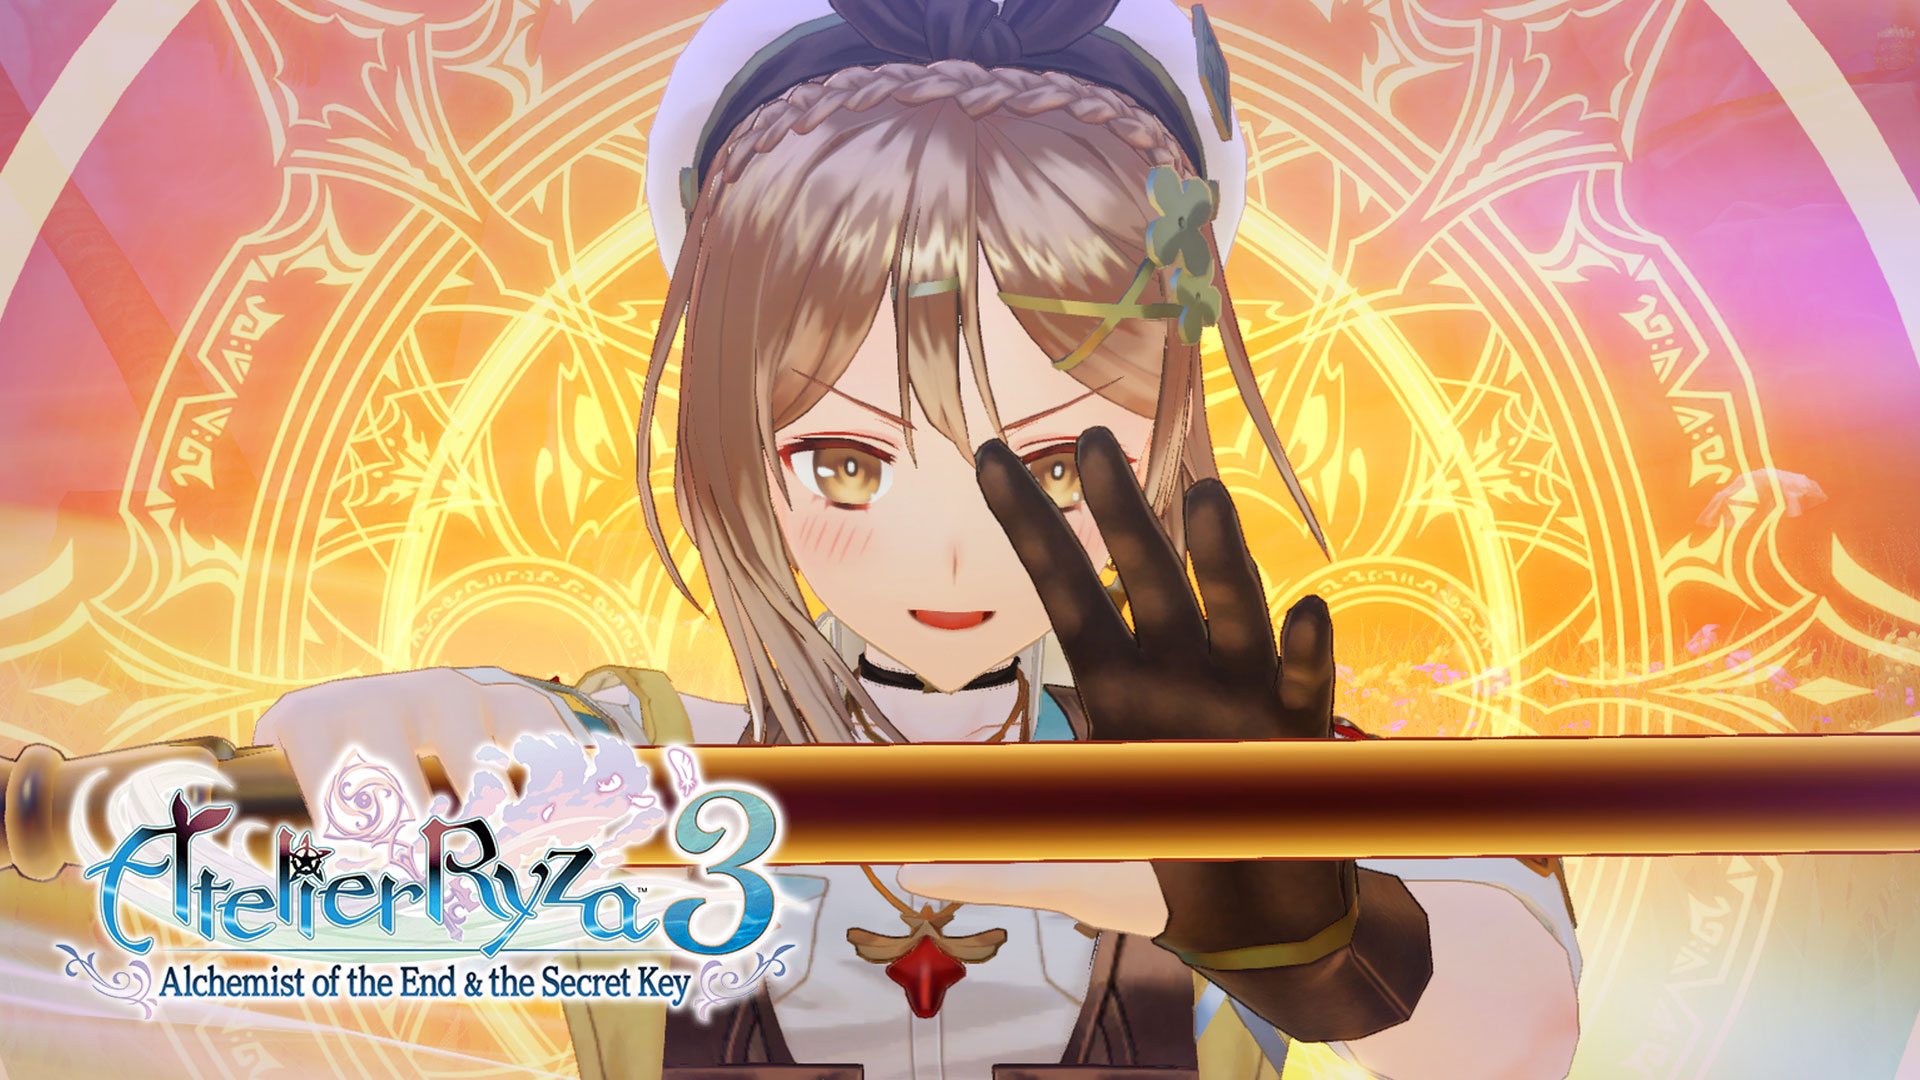  Atelier Ryza 3: Alchemist of the End & the Secret Key